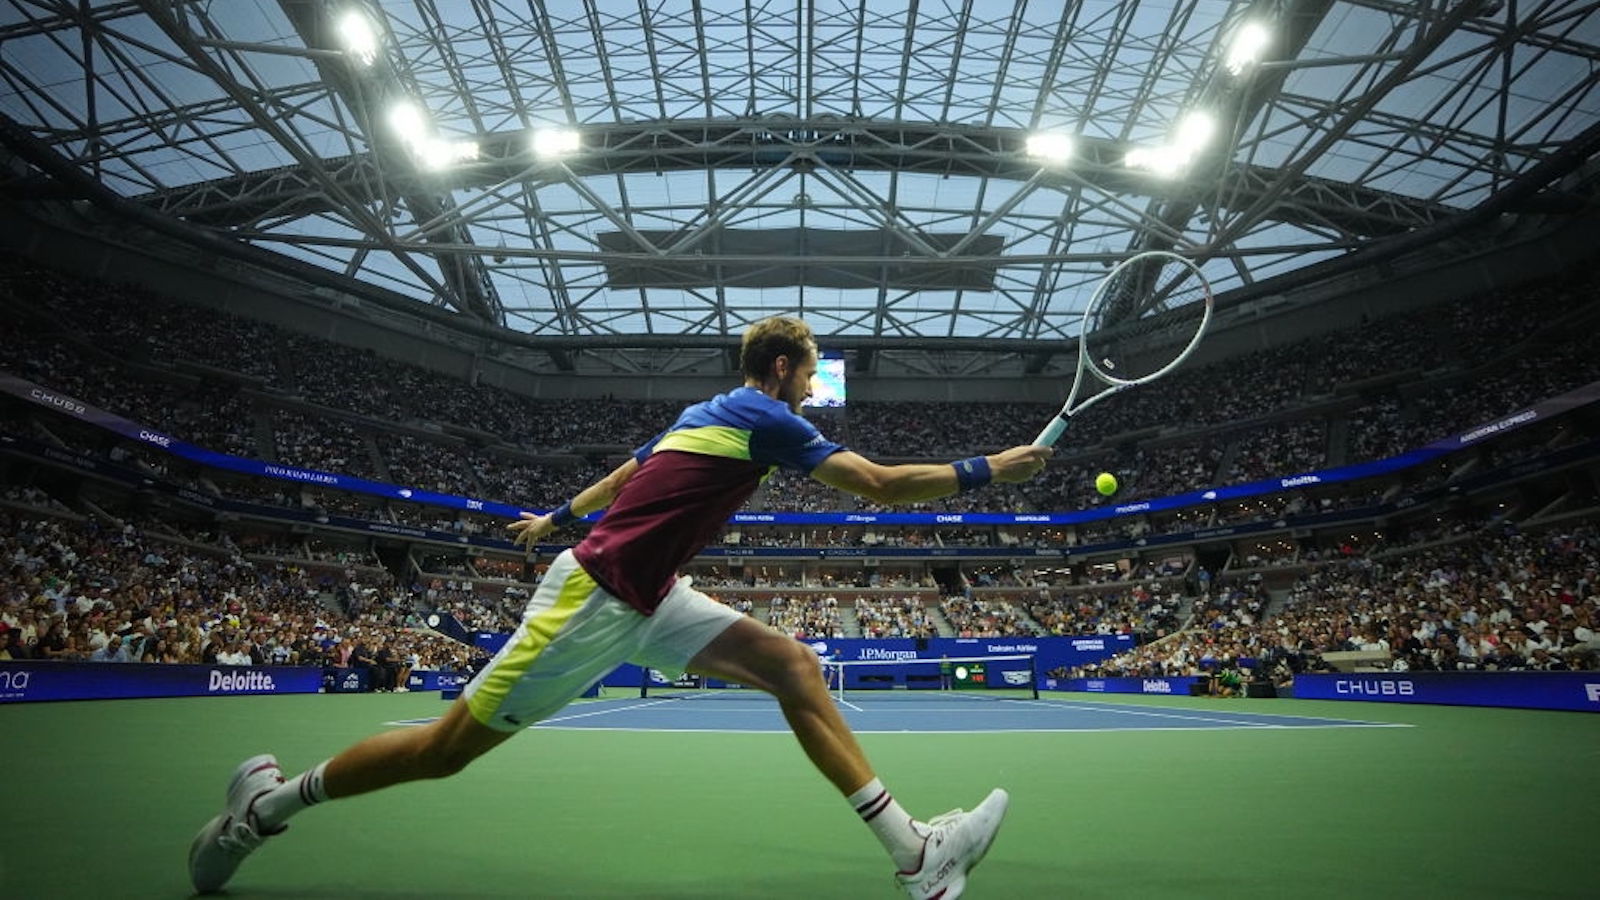 Russia Daniil Medvedev in action, returns the ball vs Serbia Novak Djokovic during the Men's Singles Finals match at Arthur Ashe Stadium.